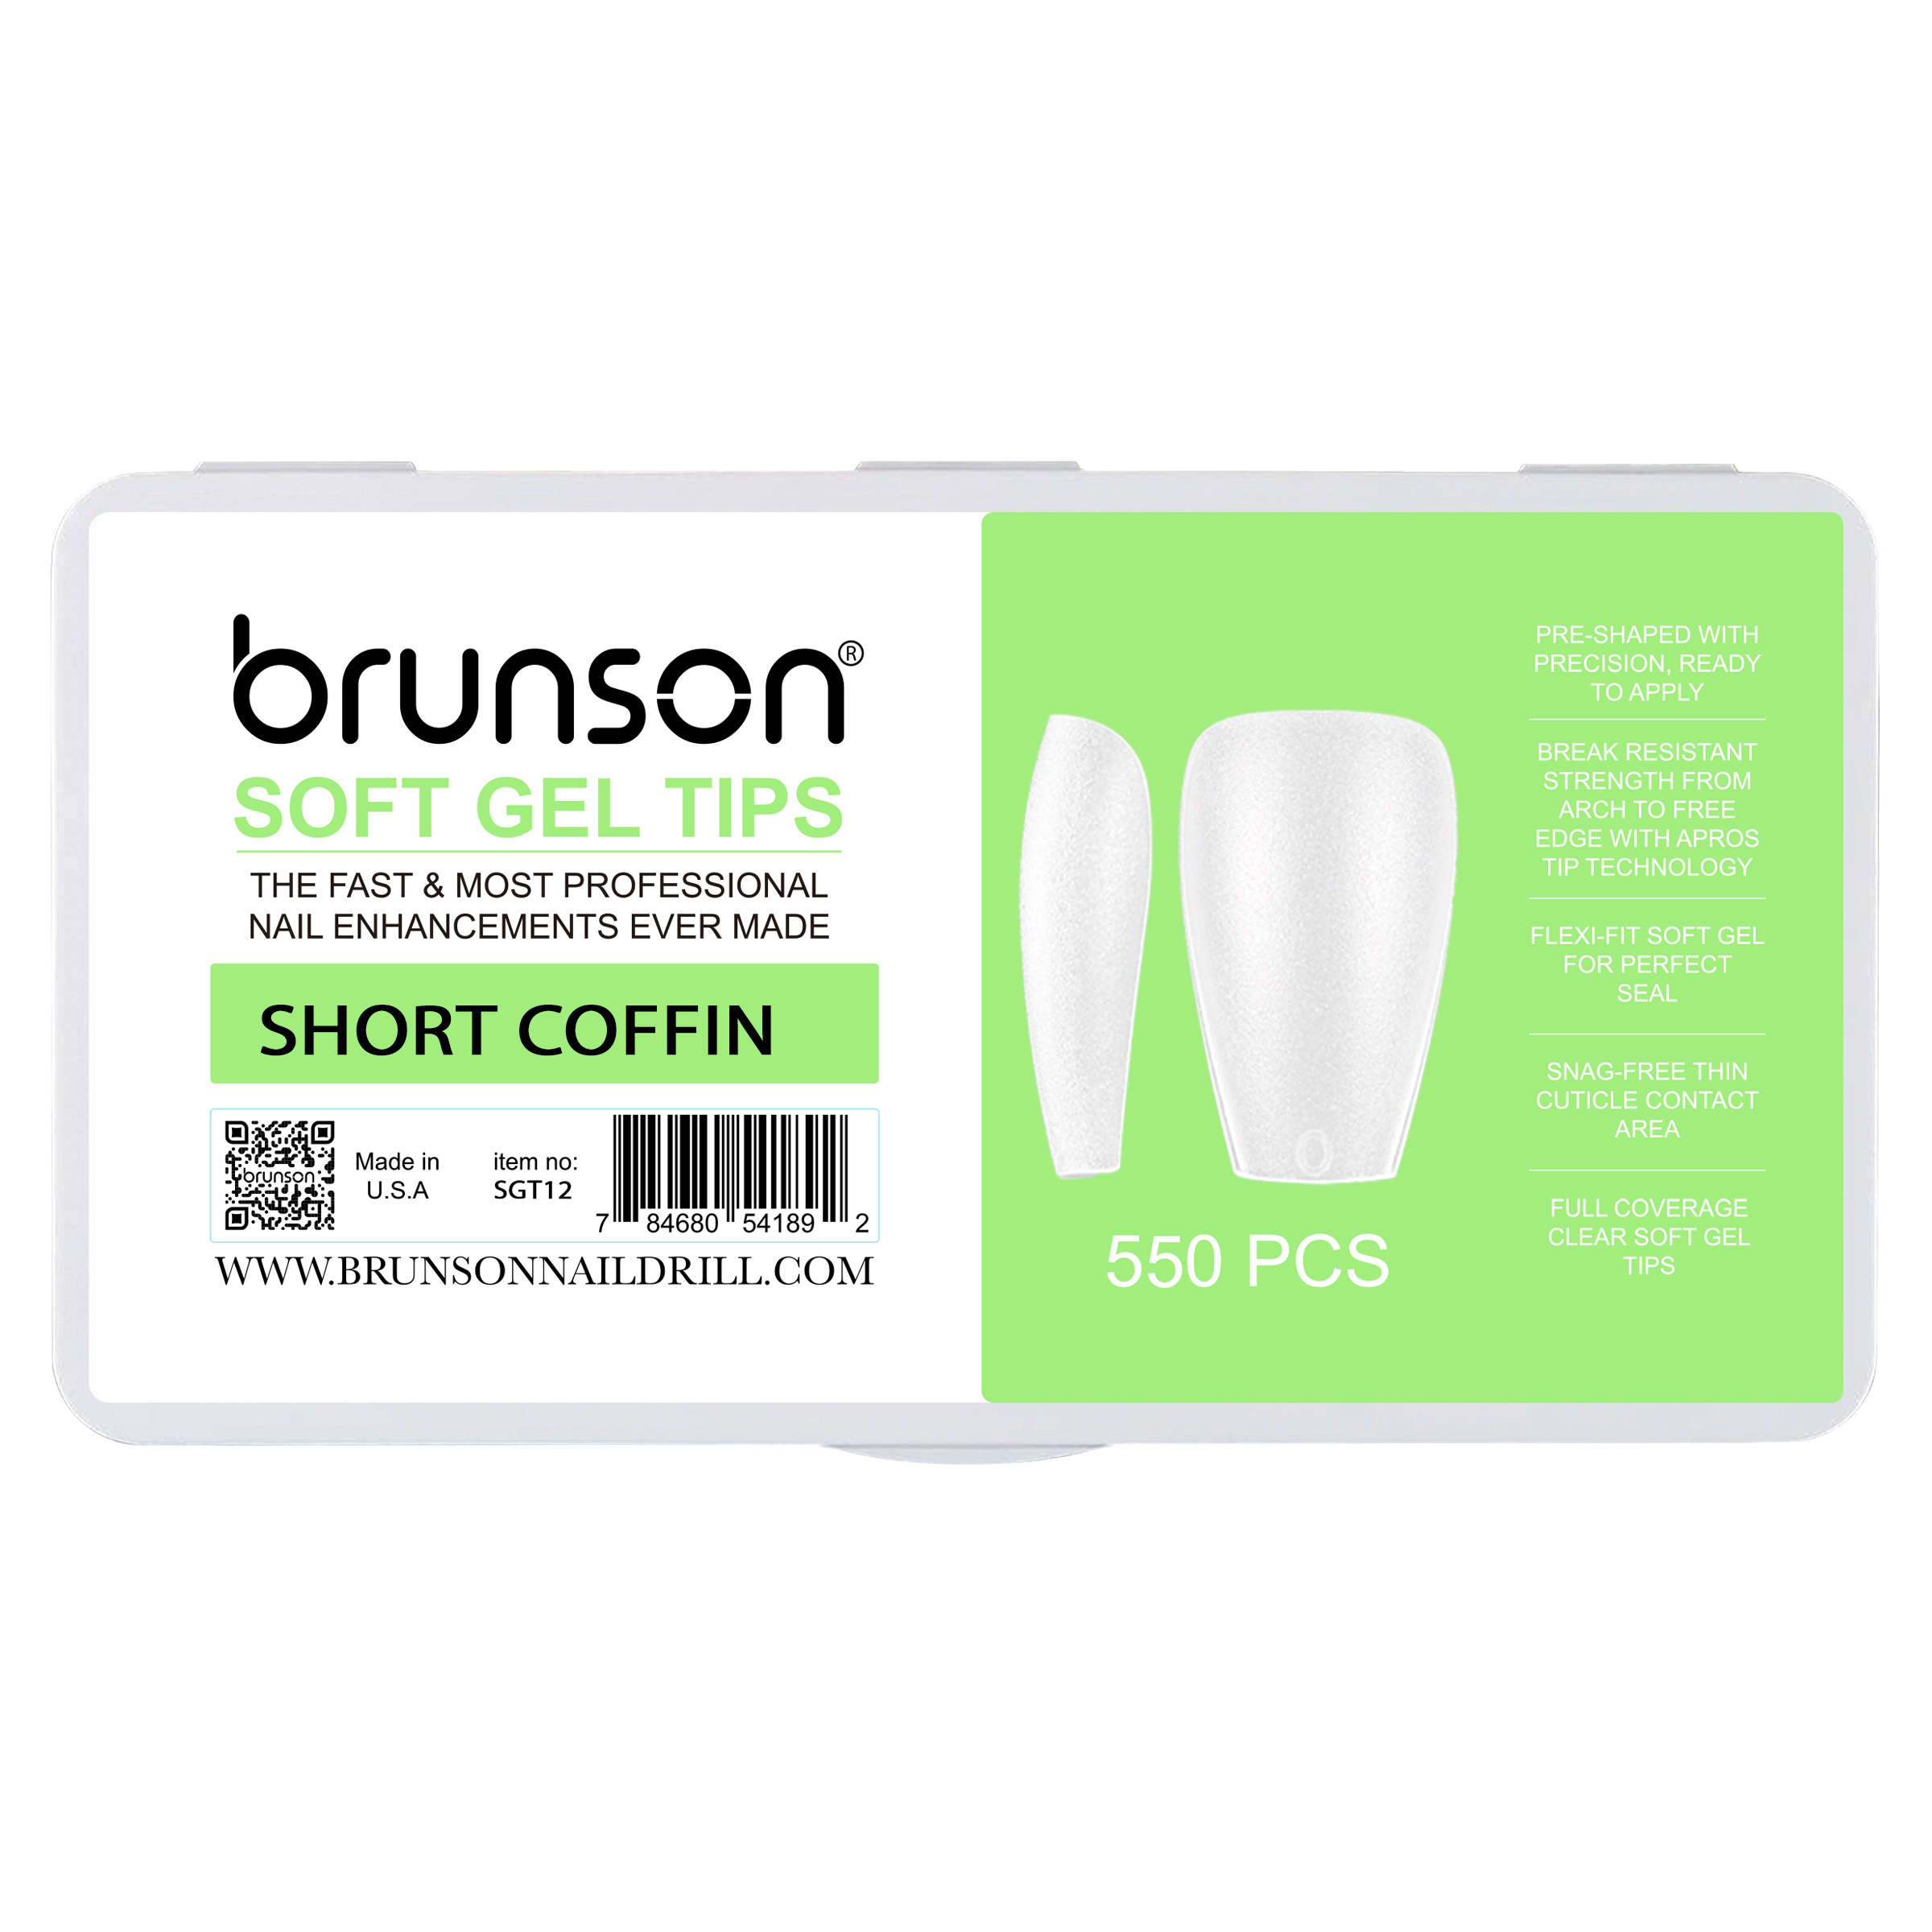 Brunson Short Coffin Shaped Soft Gel Nail Tips